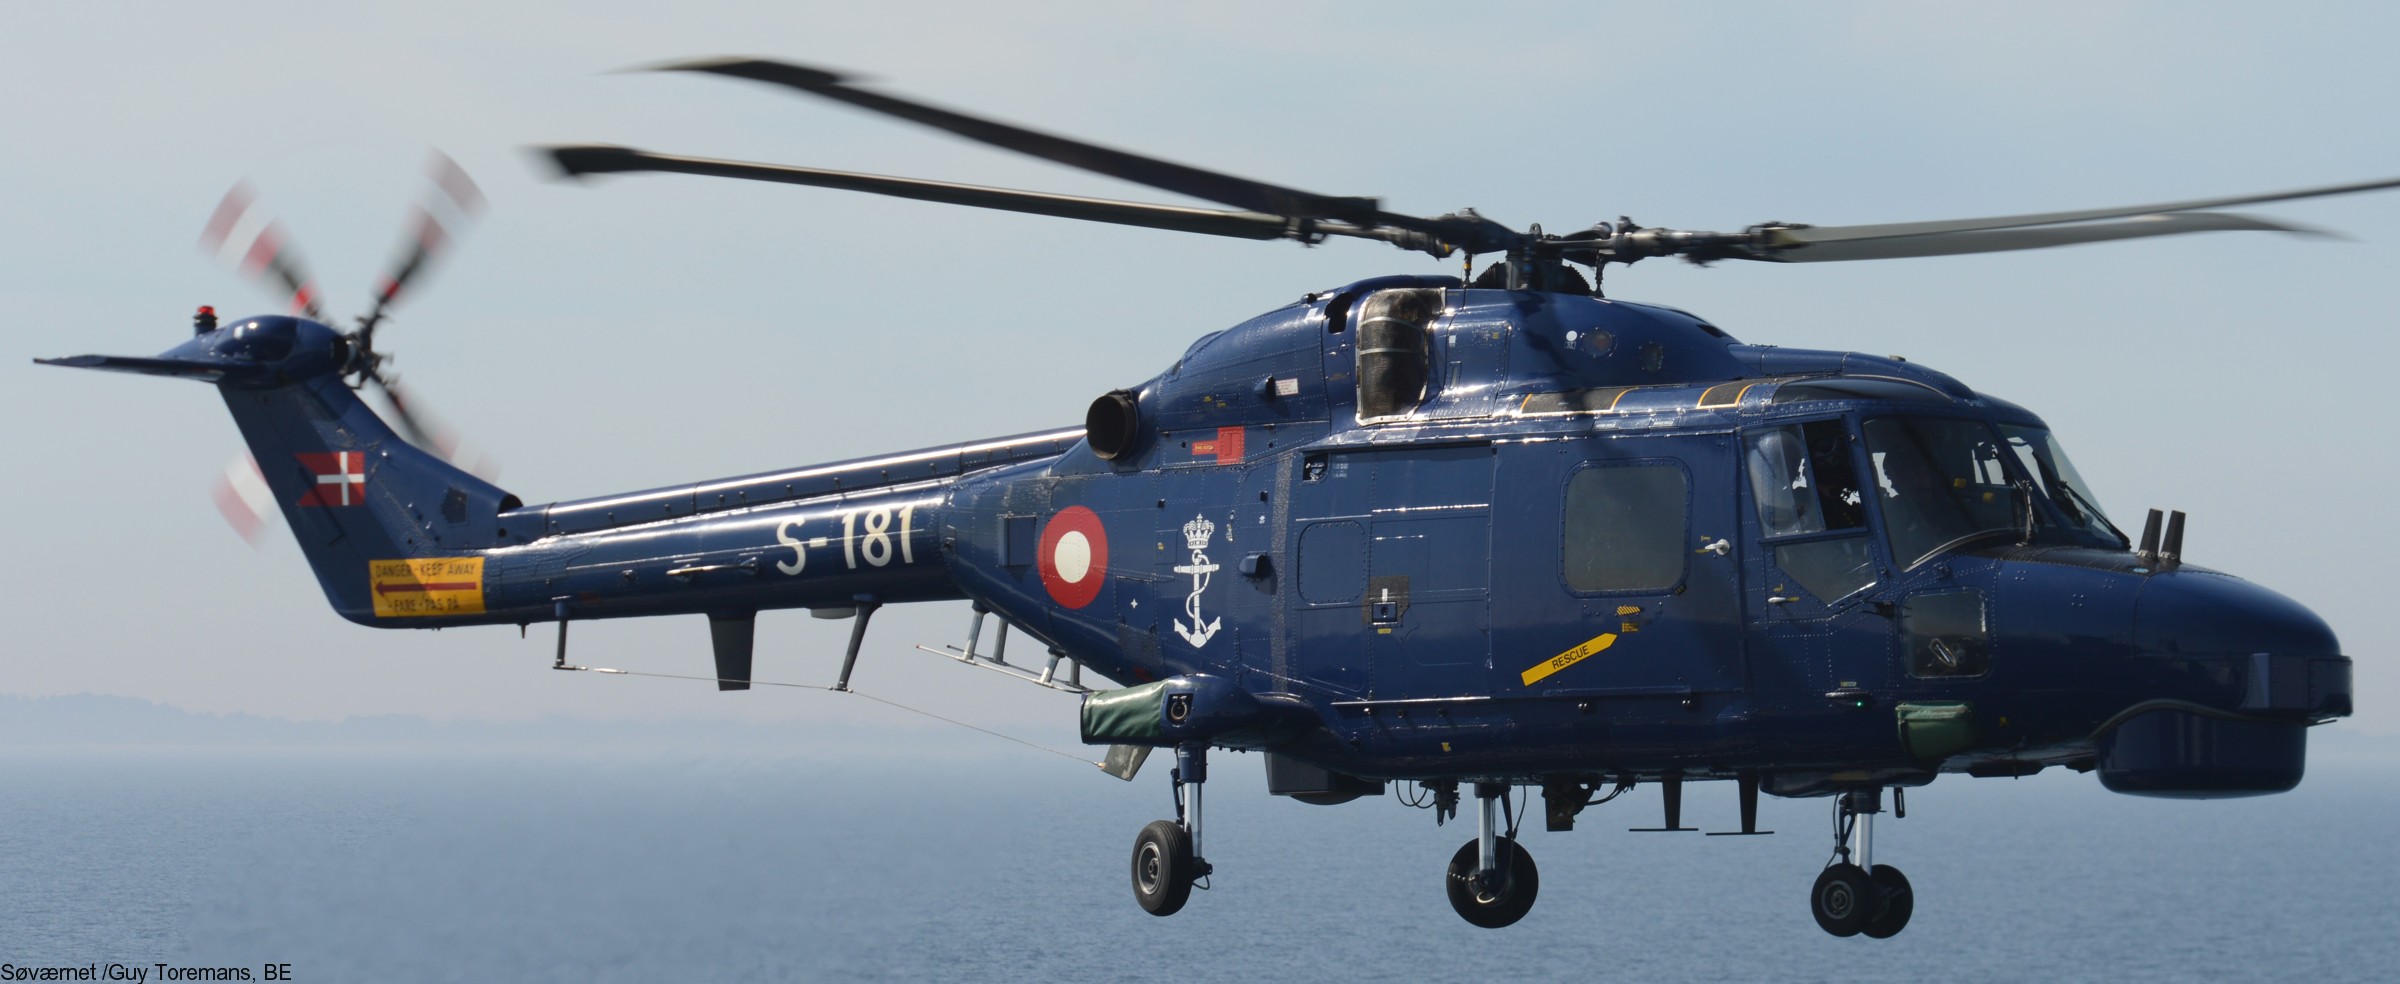 lynx mk.80 mk.90b helicopter westland royal danish navy air force kongelige danske marine flyvevabnet s-181 02